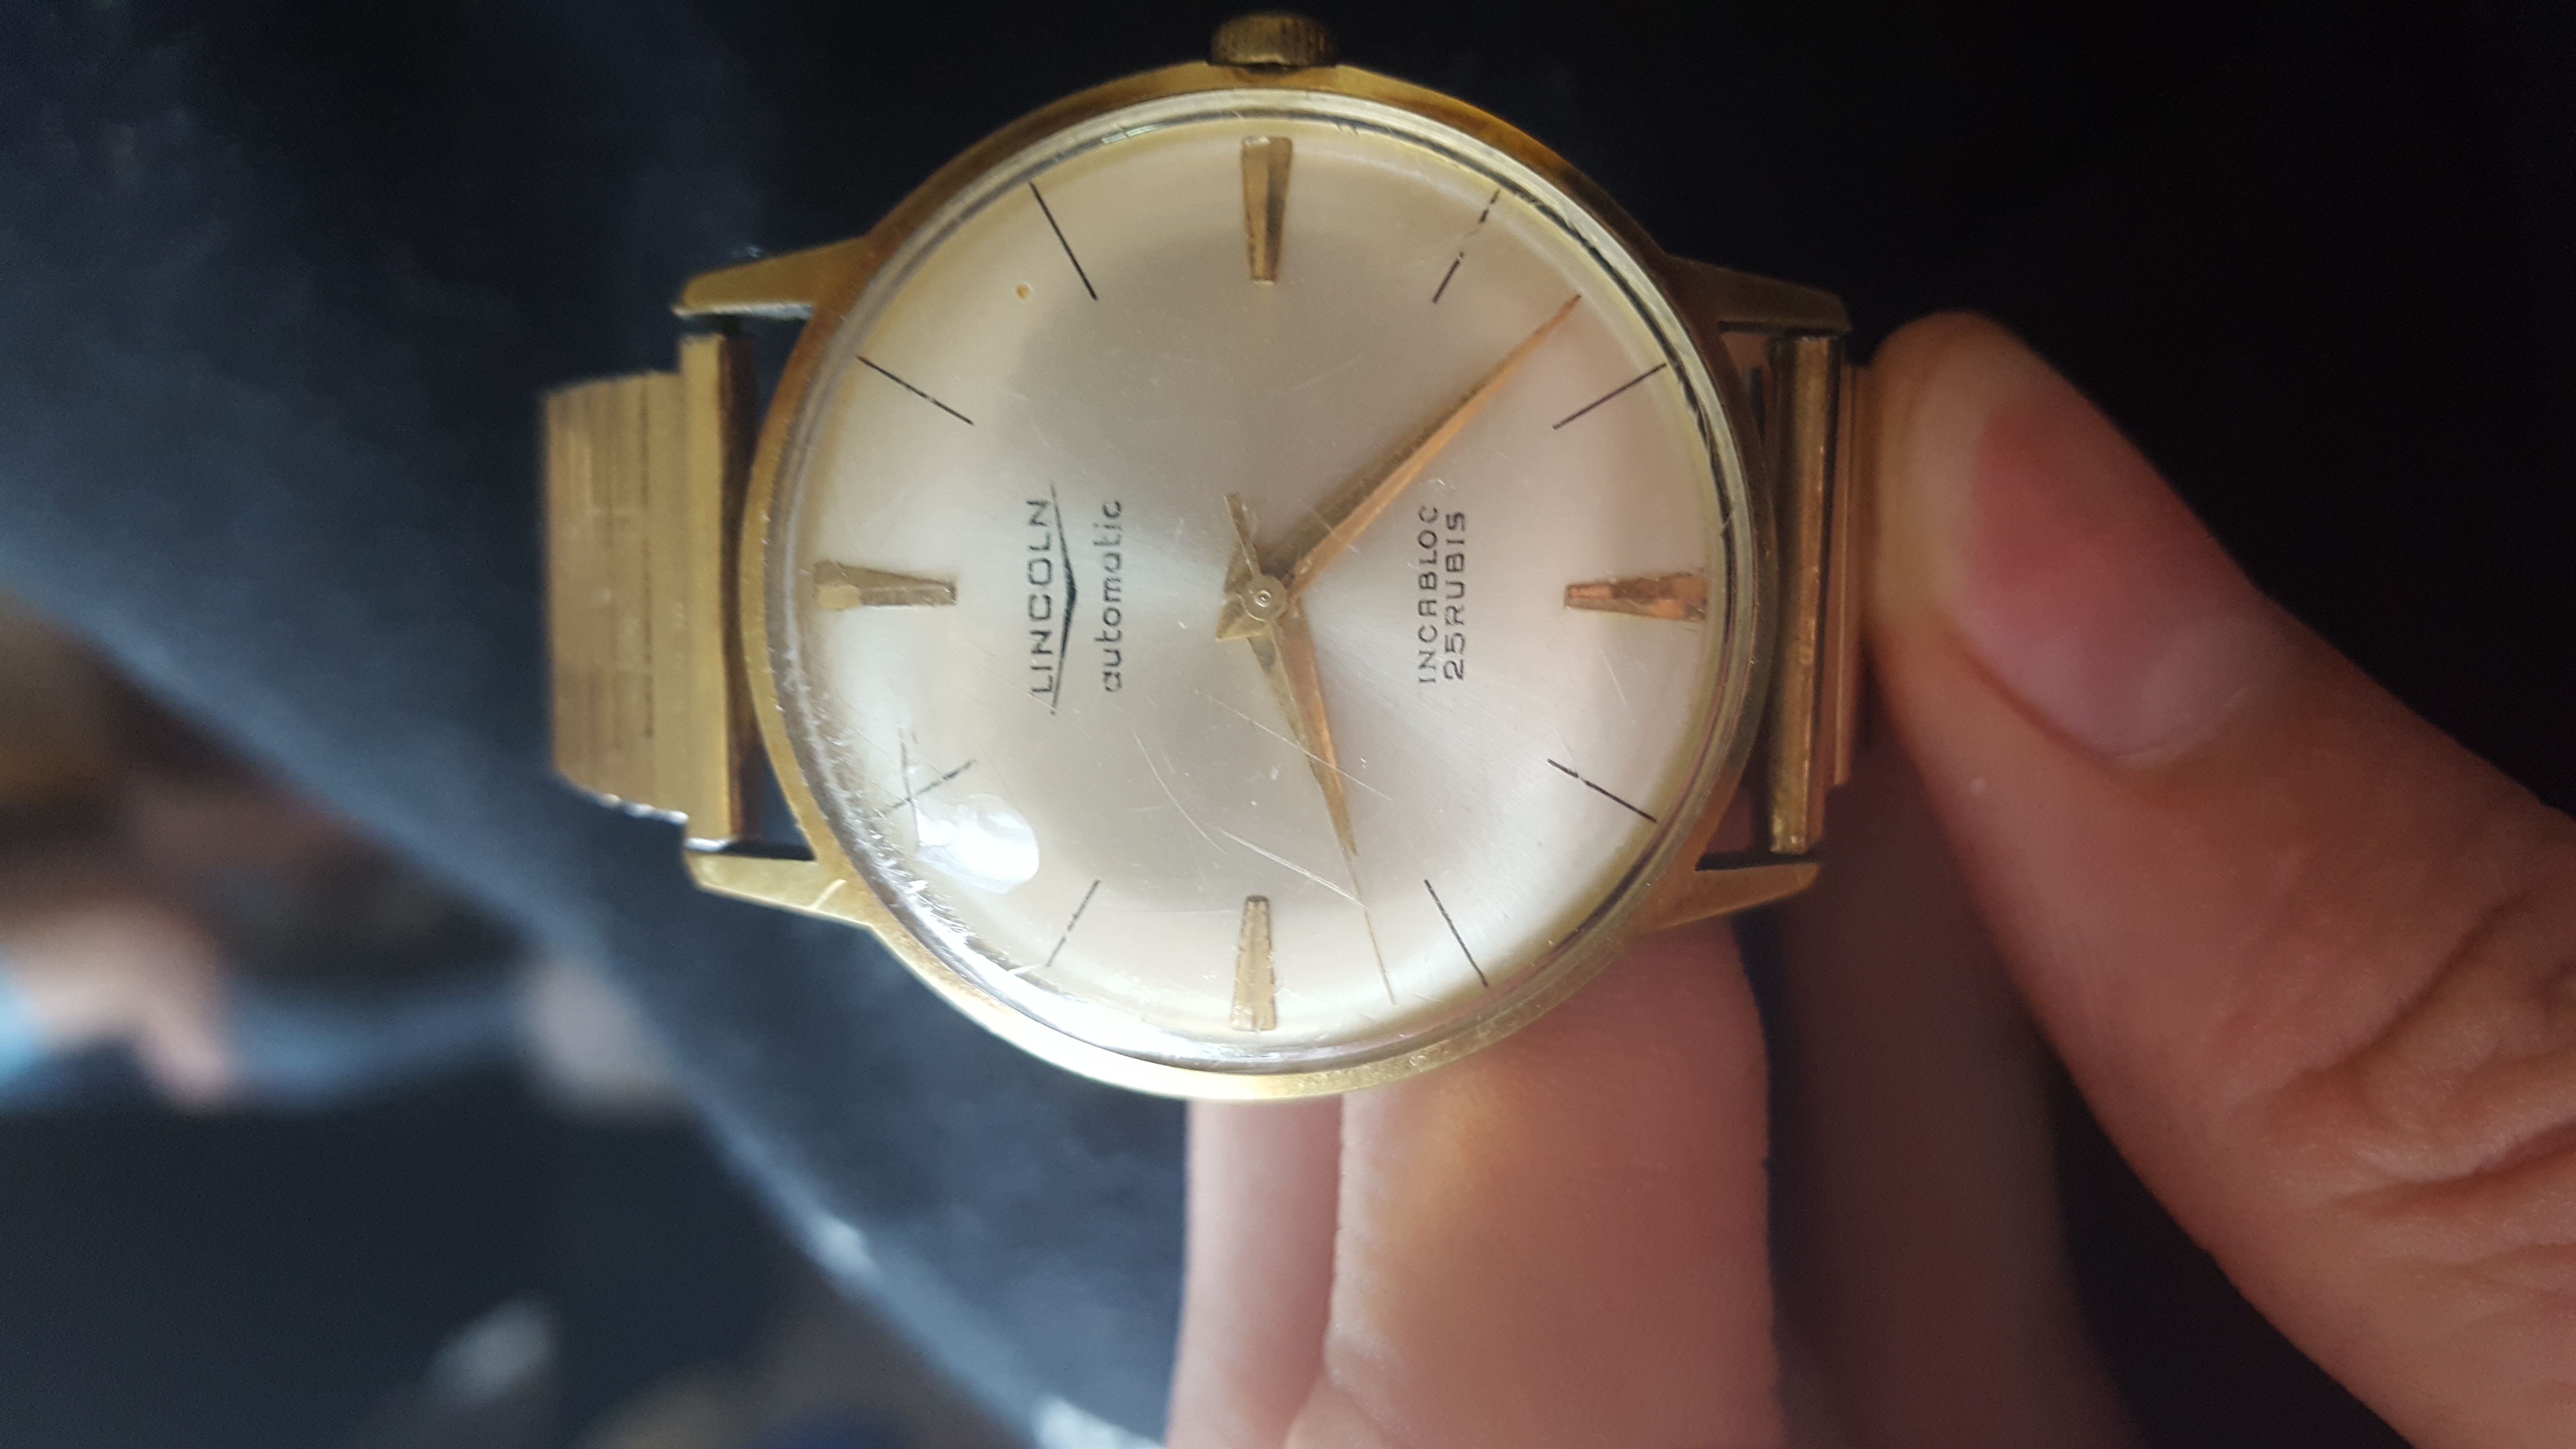 woordenboek Oranje Standaard Beteknis 25 rubis en hoe kom ik er achter hoeveel mijn oude horloge waard  is.? - GoeieVraag